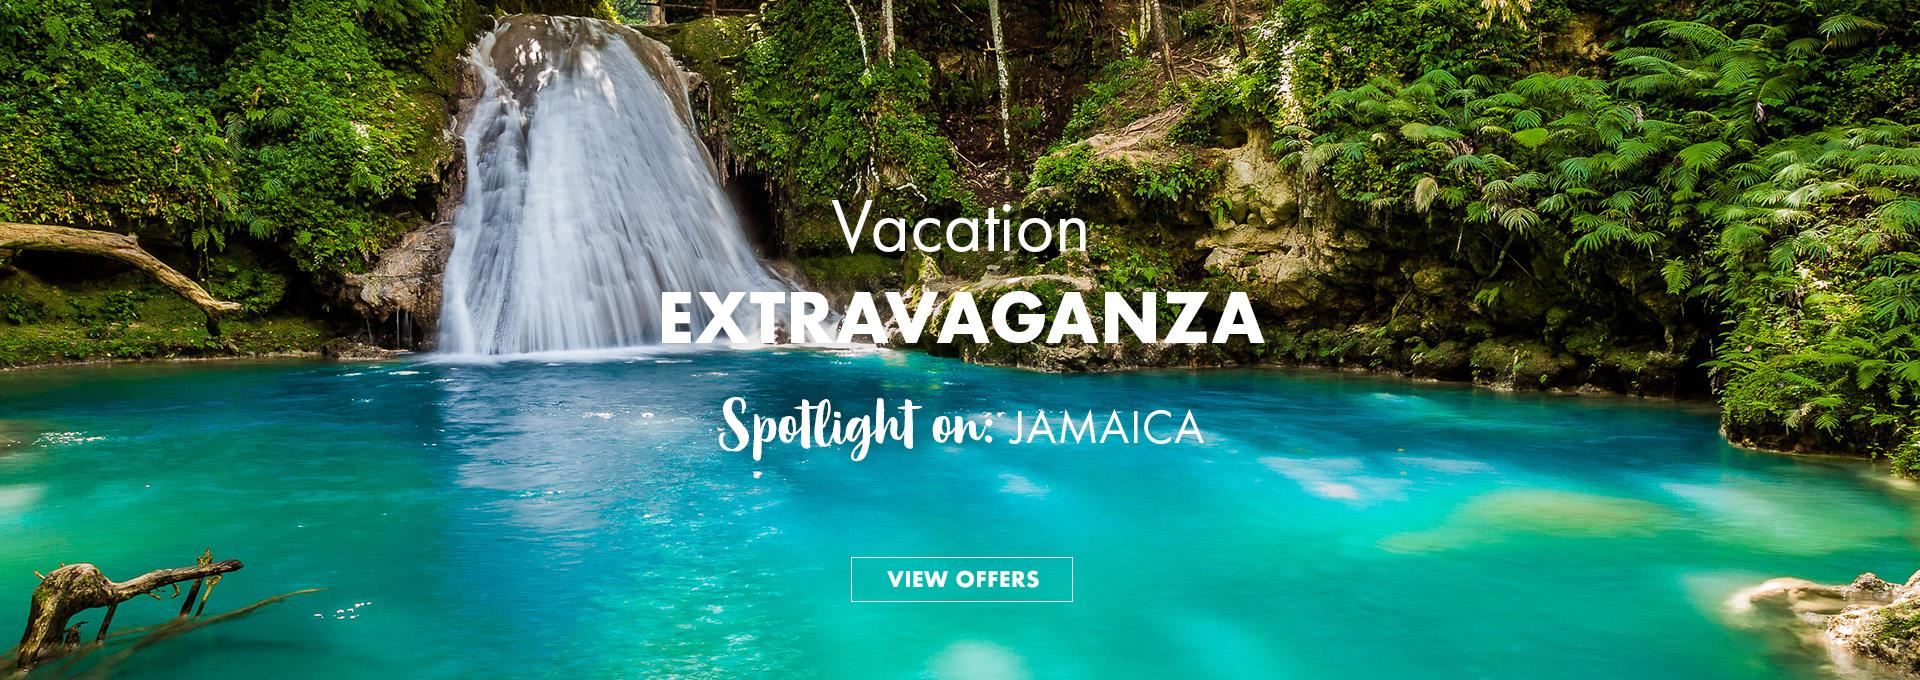 Vacation Extravaganza Jamaica banner